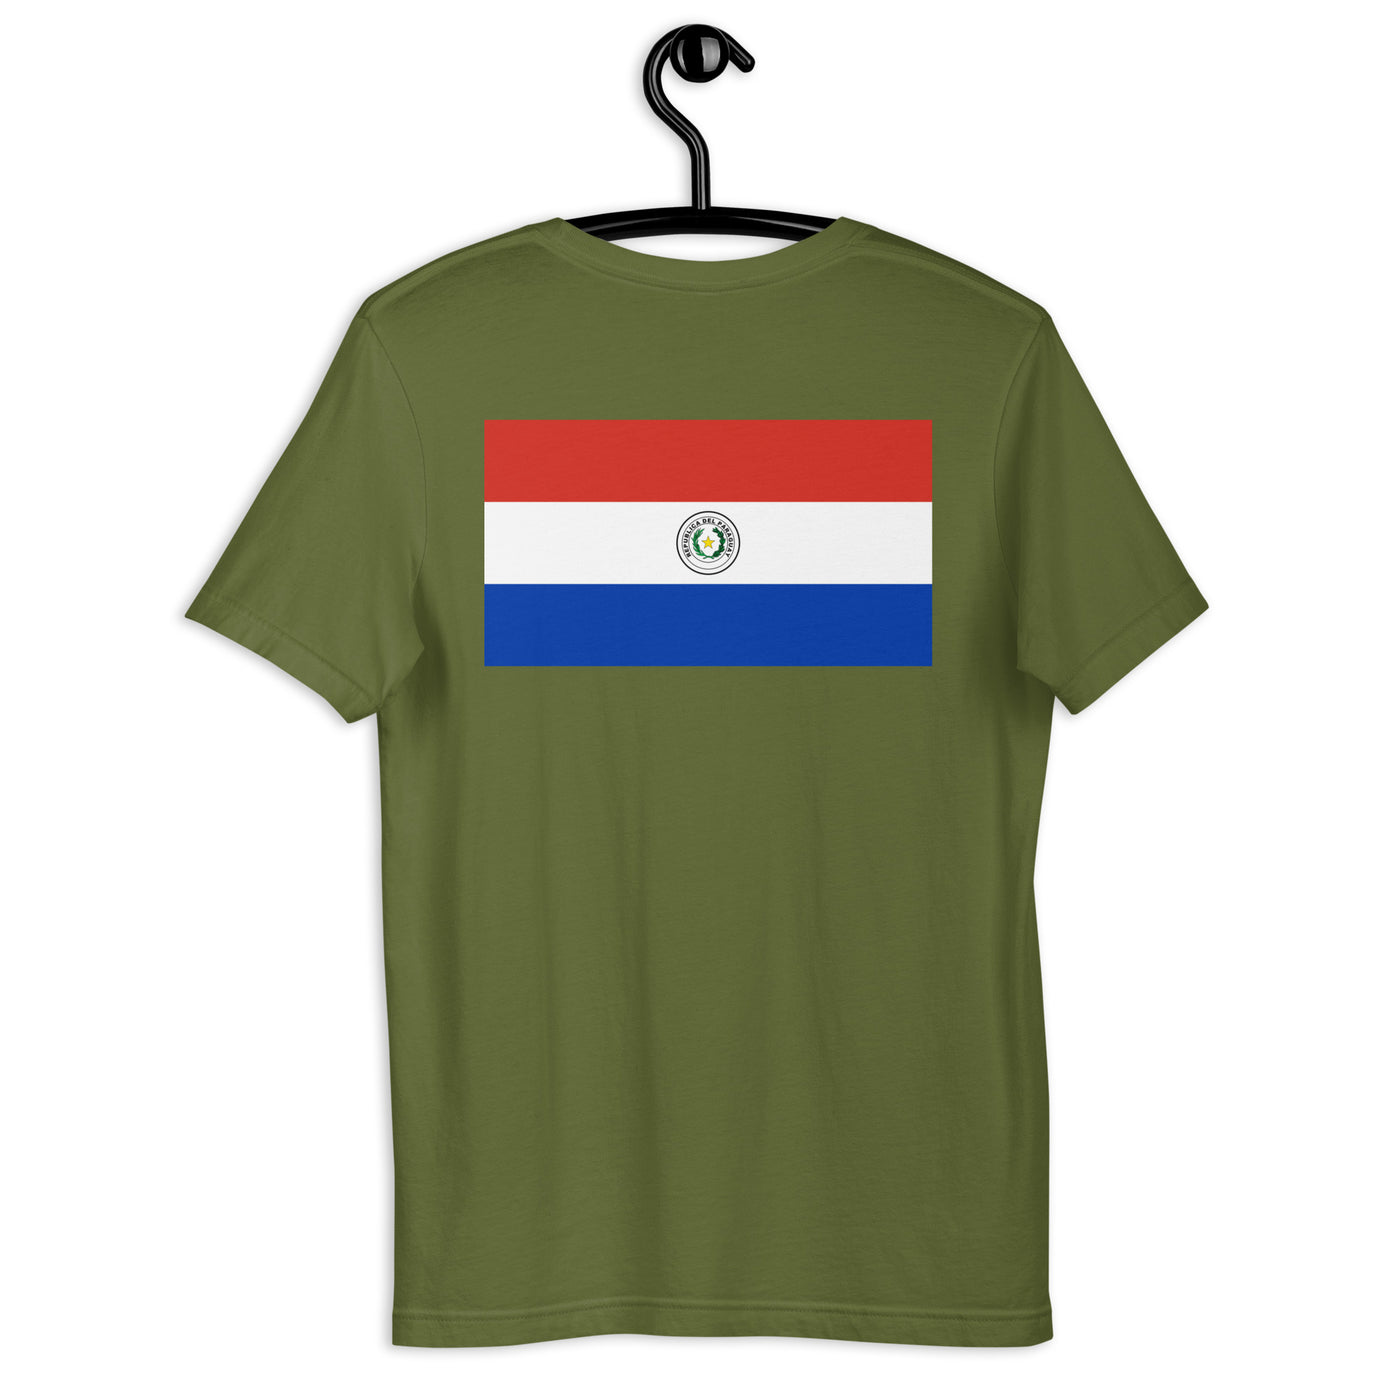 Paraguay POR VIDA (White Text) Unisex t-shirt